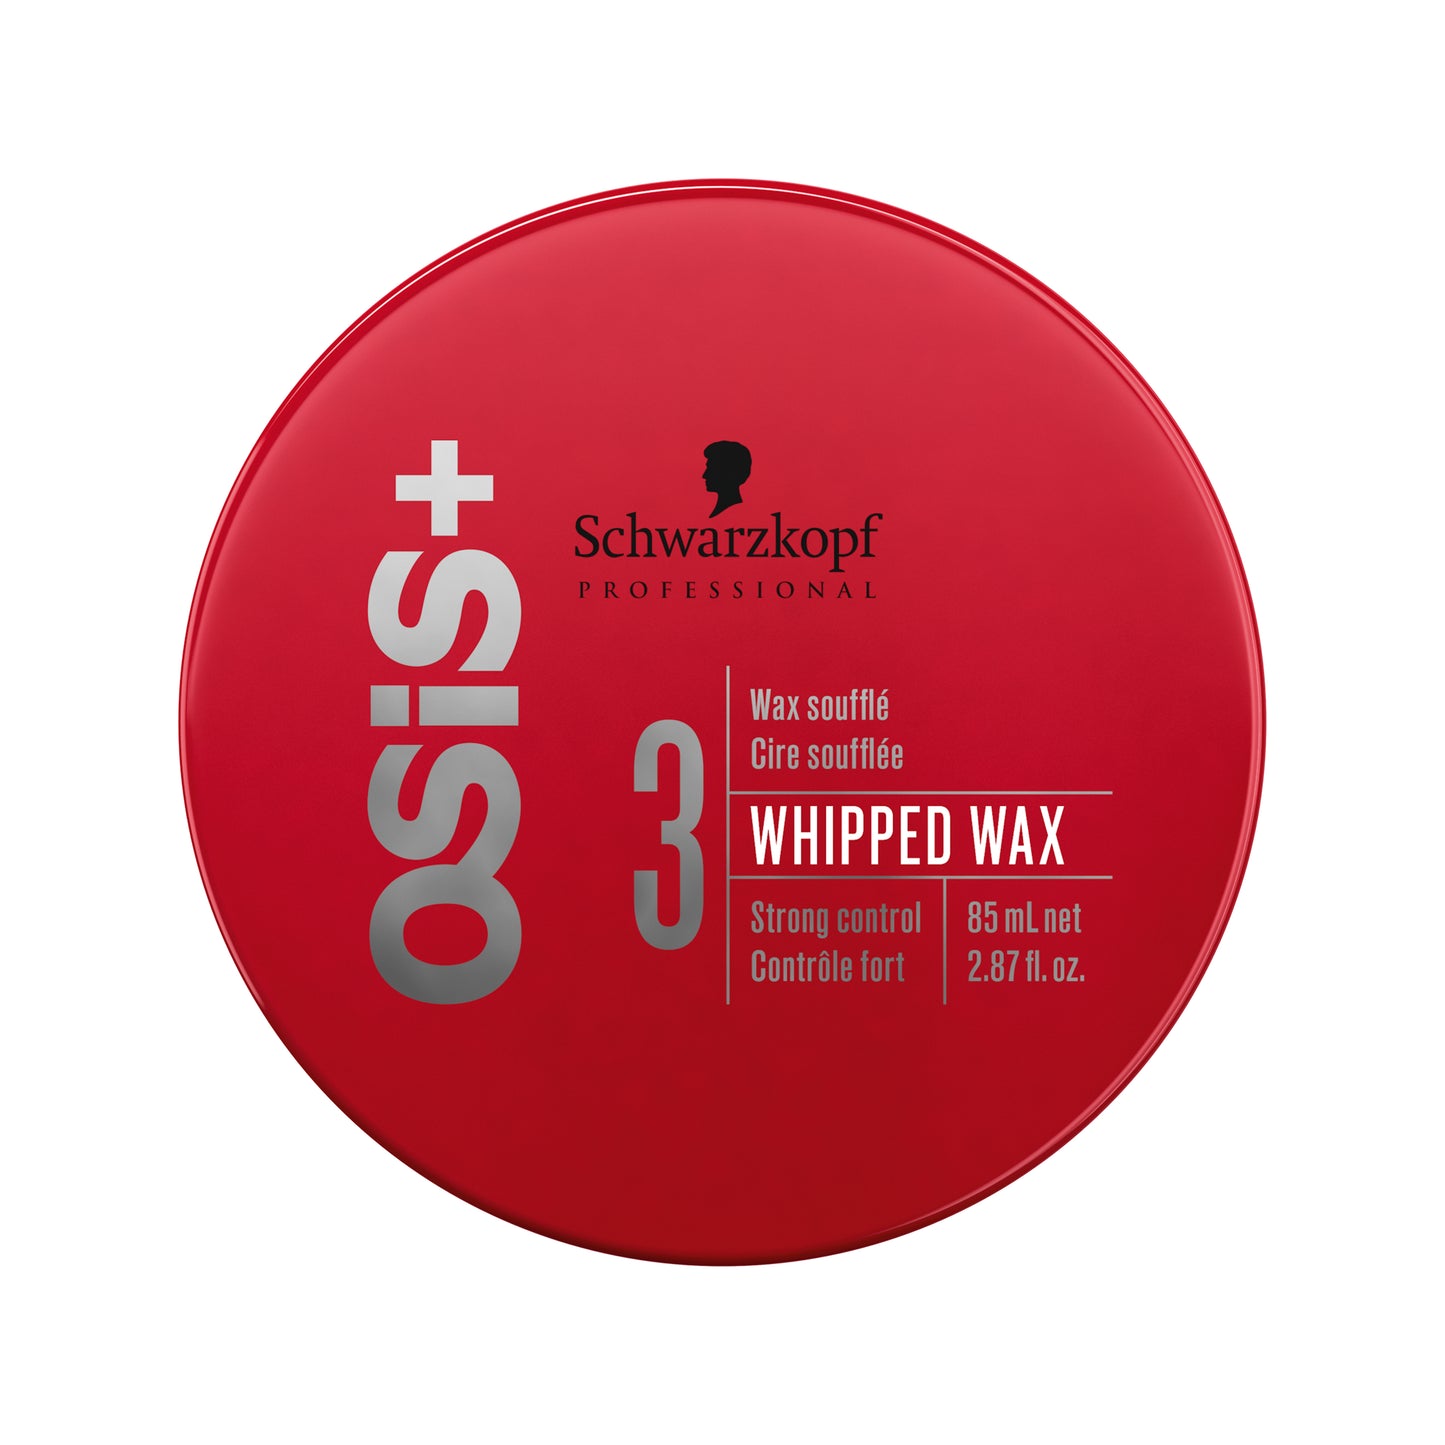 OSiS+ WHIPPED WAX Wax Souffle, 85mL